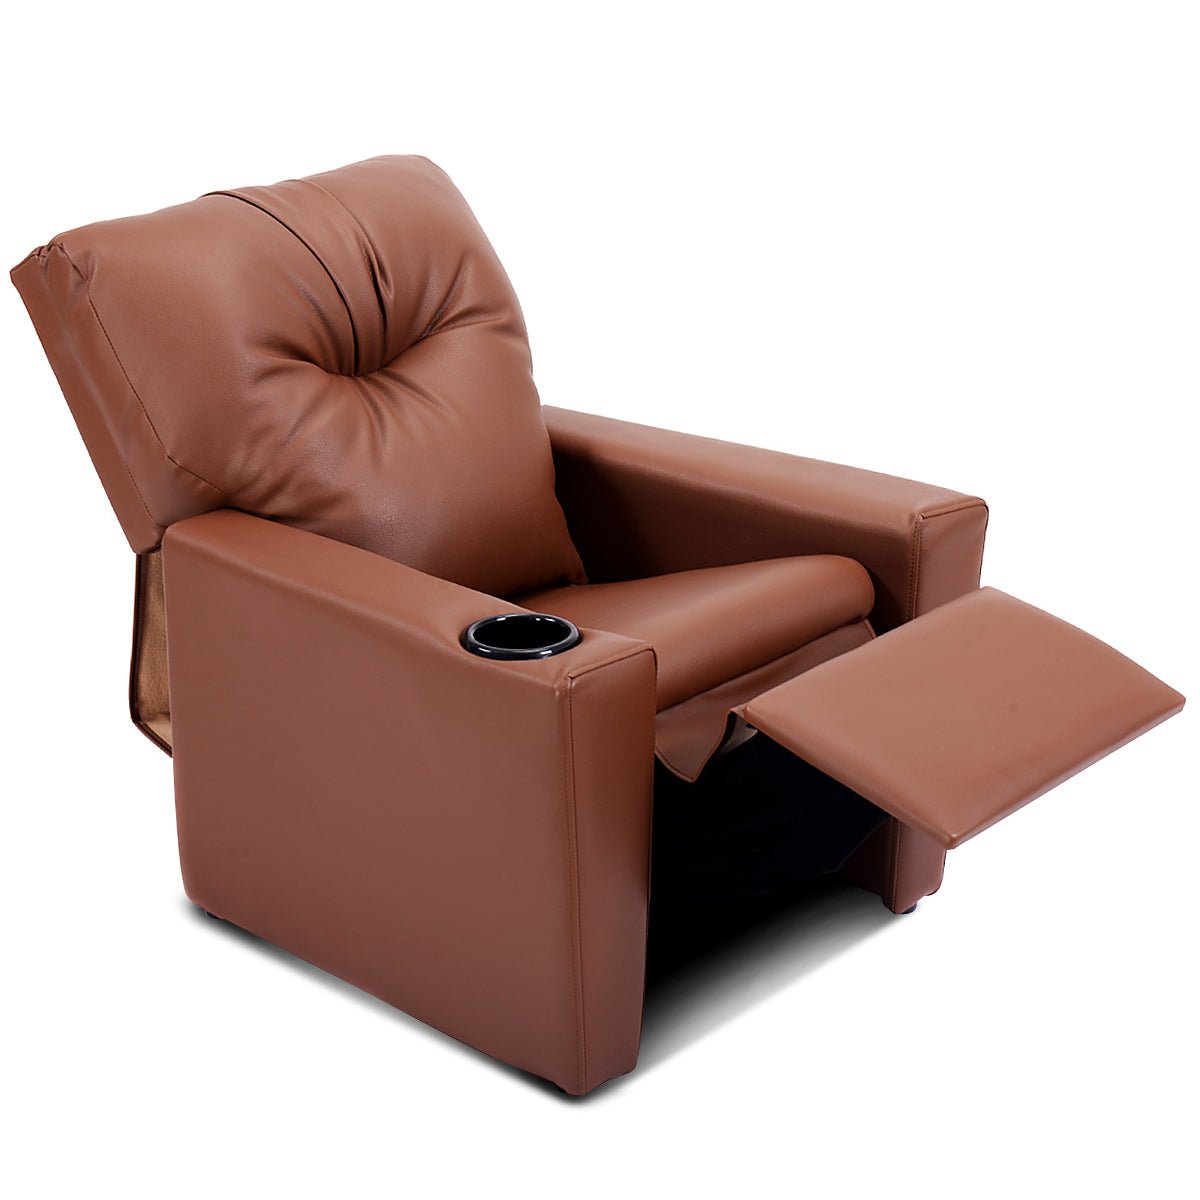 Brown Kids Lounge Chair: Adjustable Comfort with High Backrest and Armrest